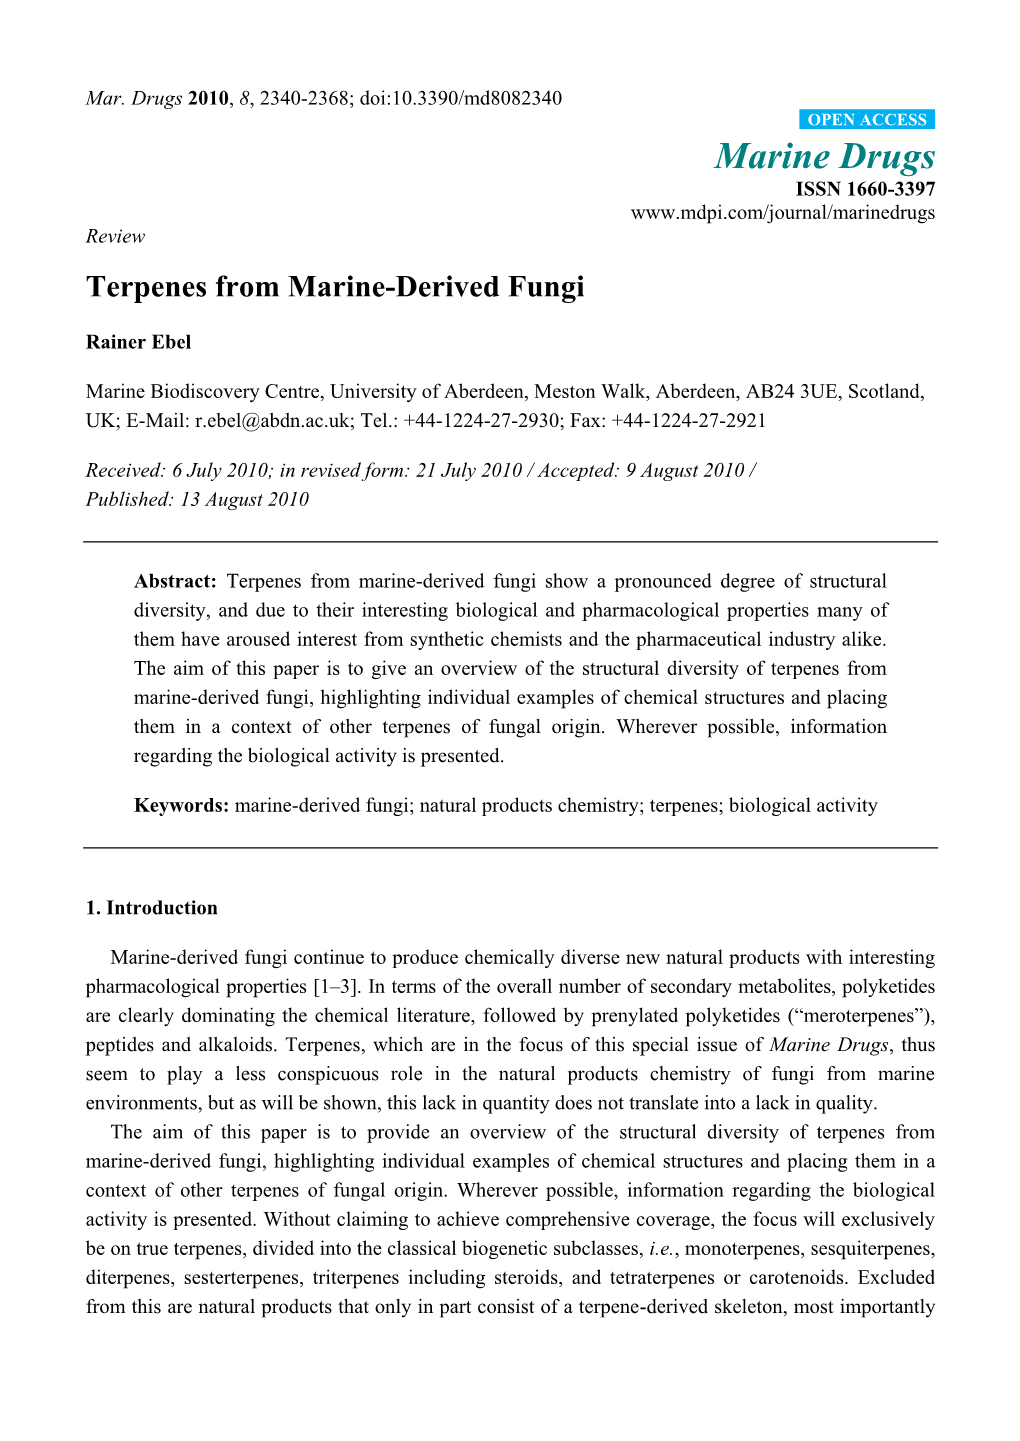 Terpenes from Marine-Derived Fungi